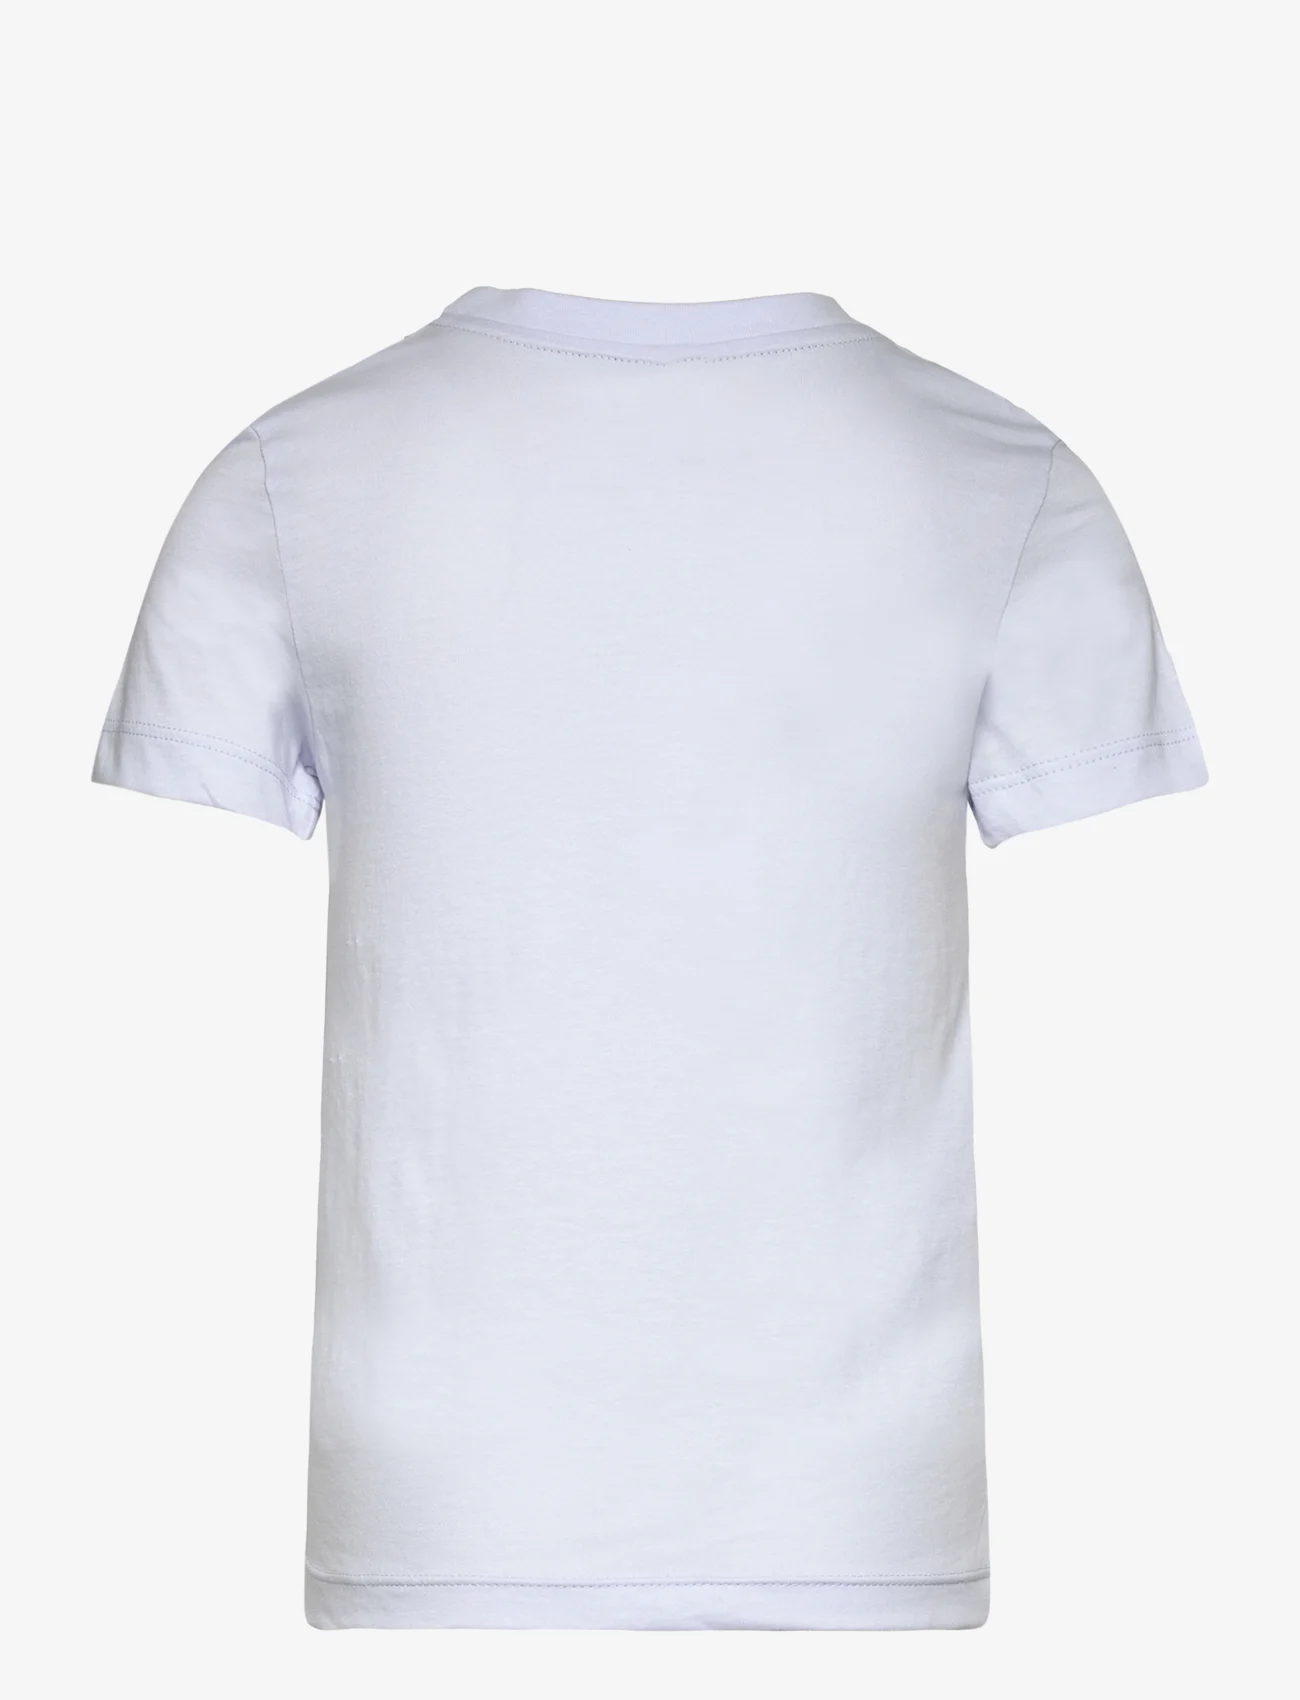 Lacoste - TEE-SHIRT&TURTLE - kortärmade t-shirts - phoenix blue - 1